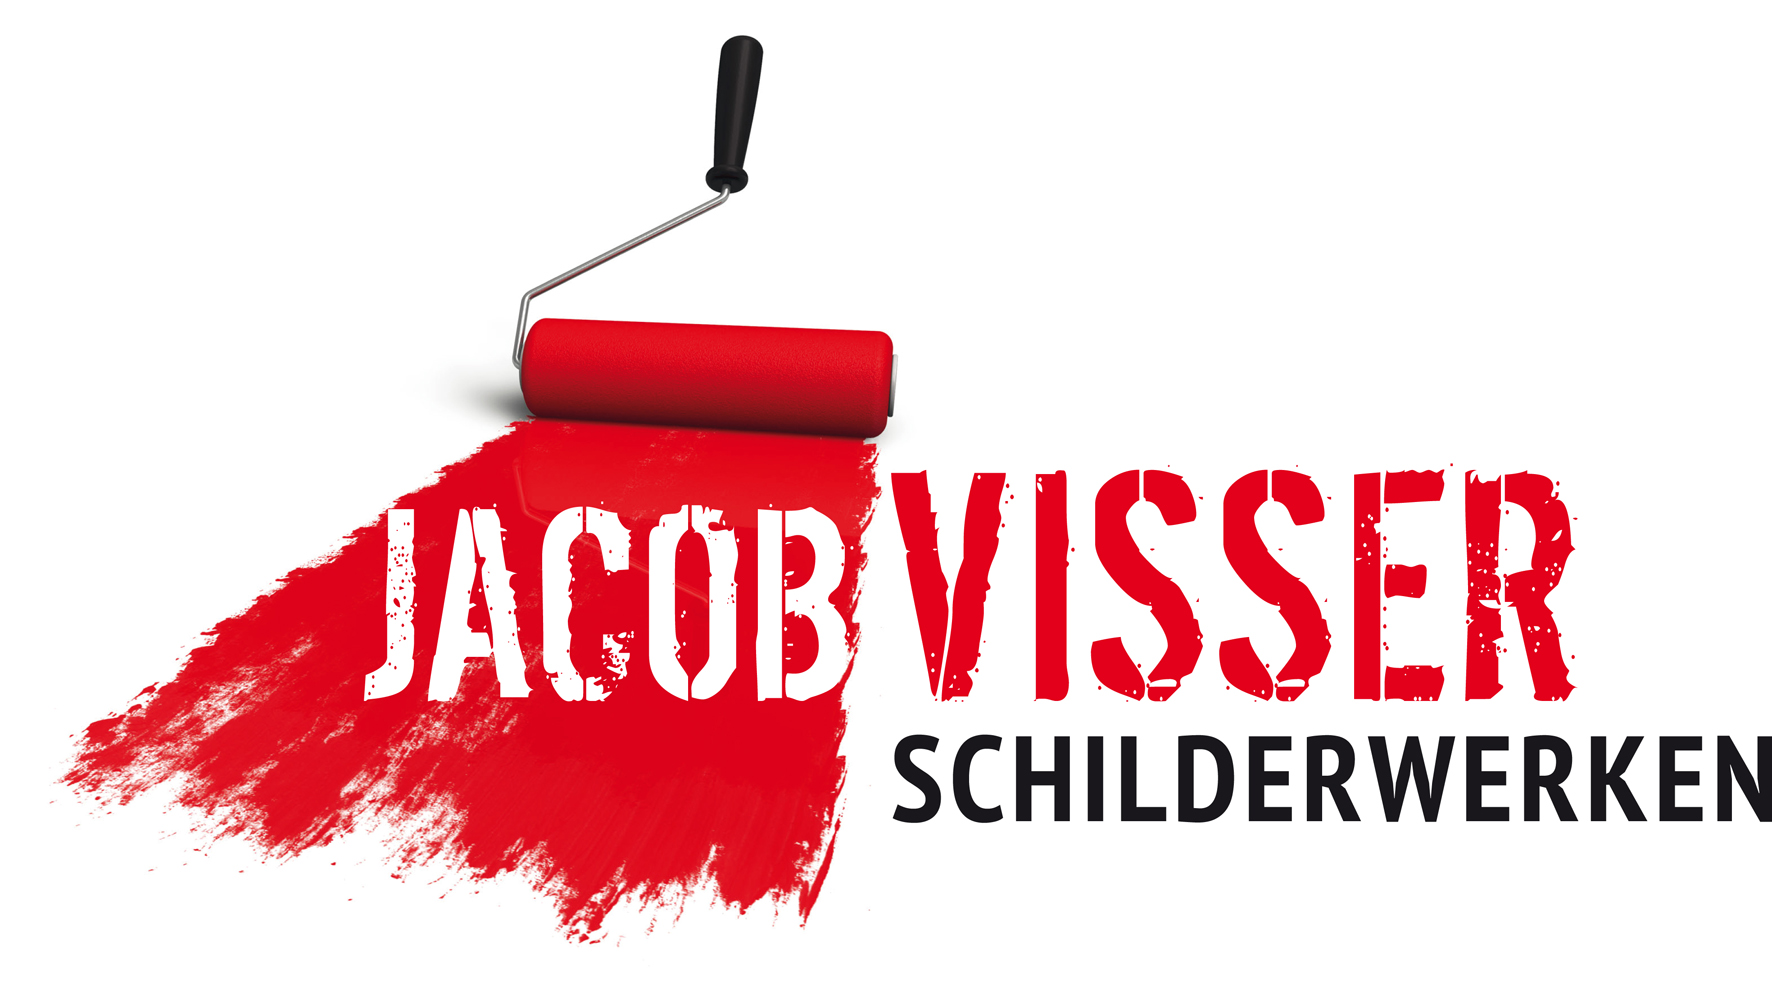 Jacob Visser